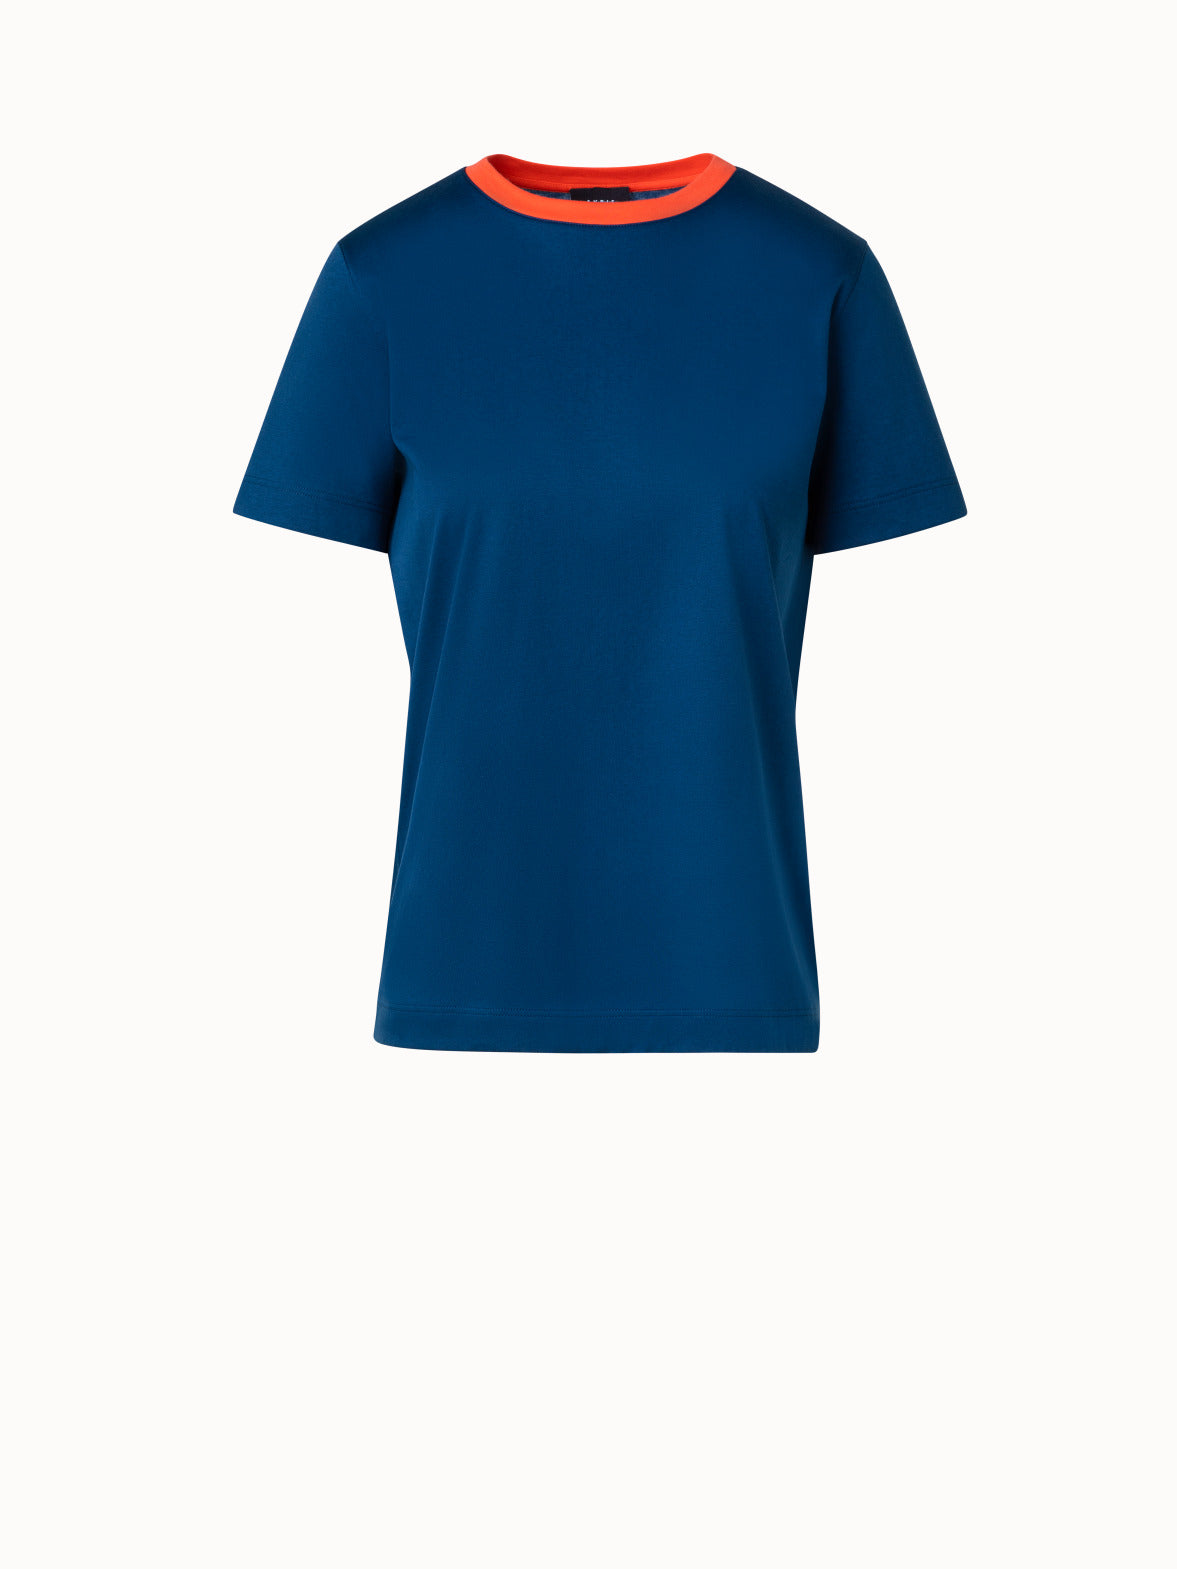 Cotton Jersey T-Shirt with Color Neckline Block